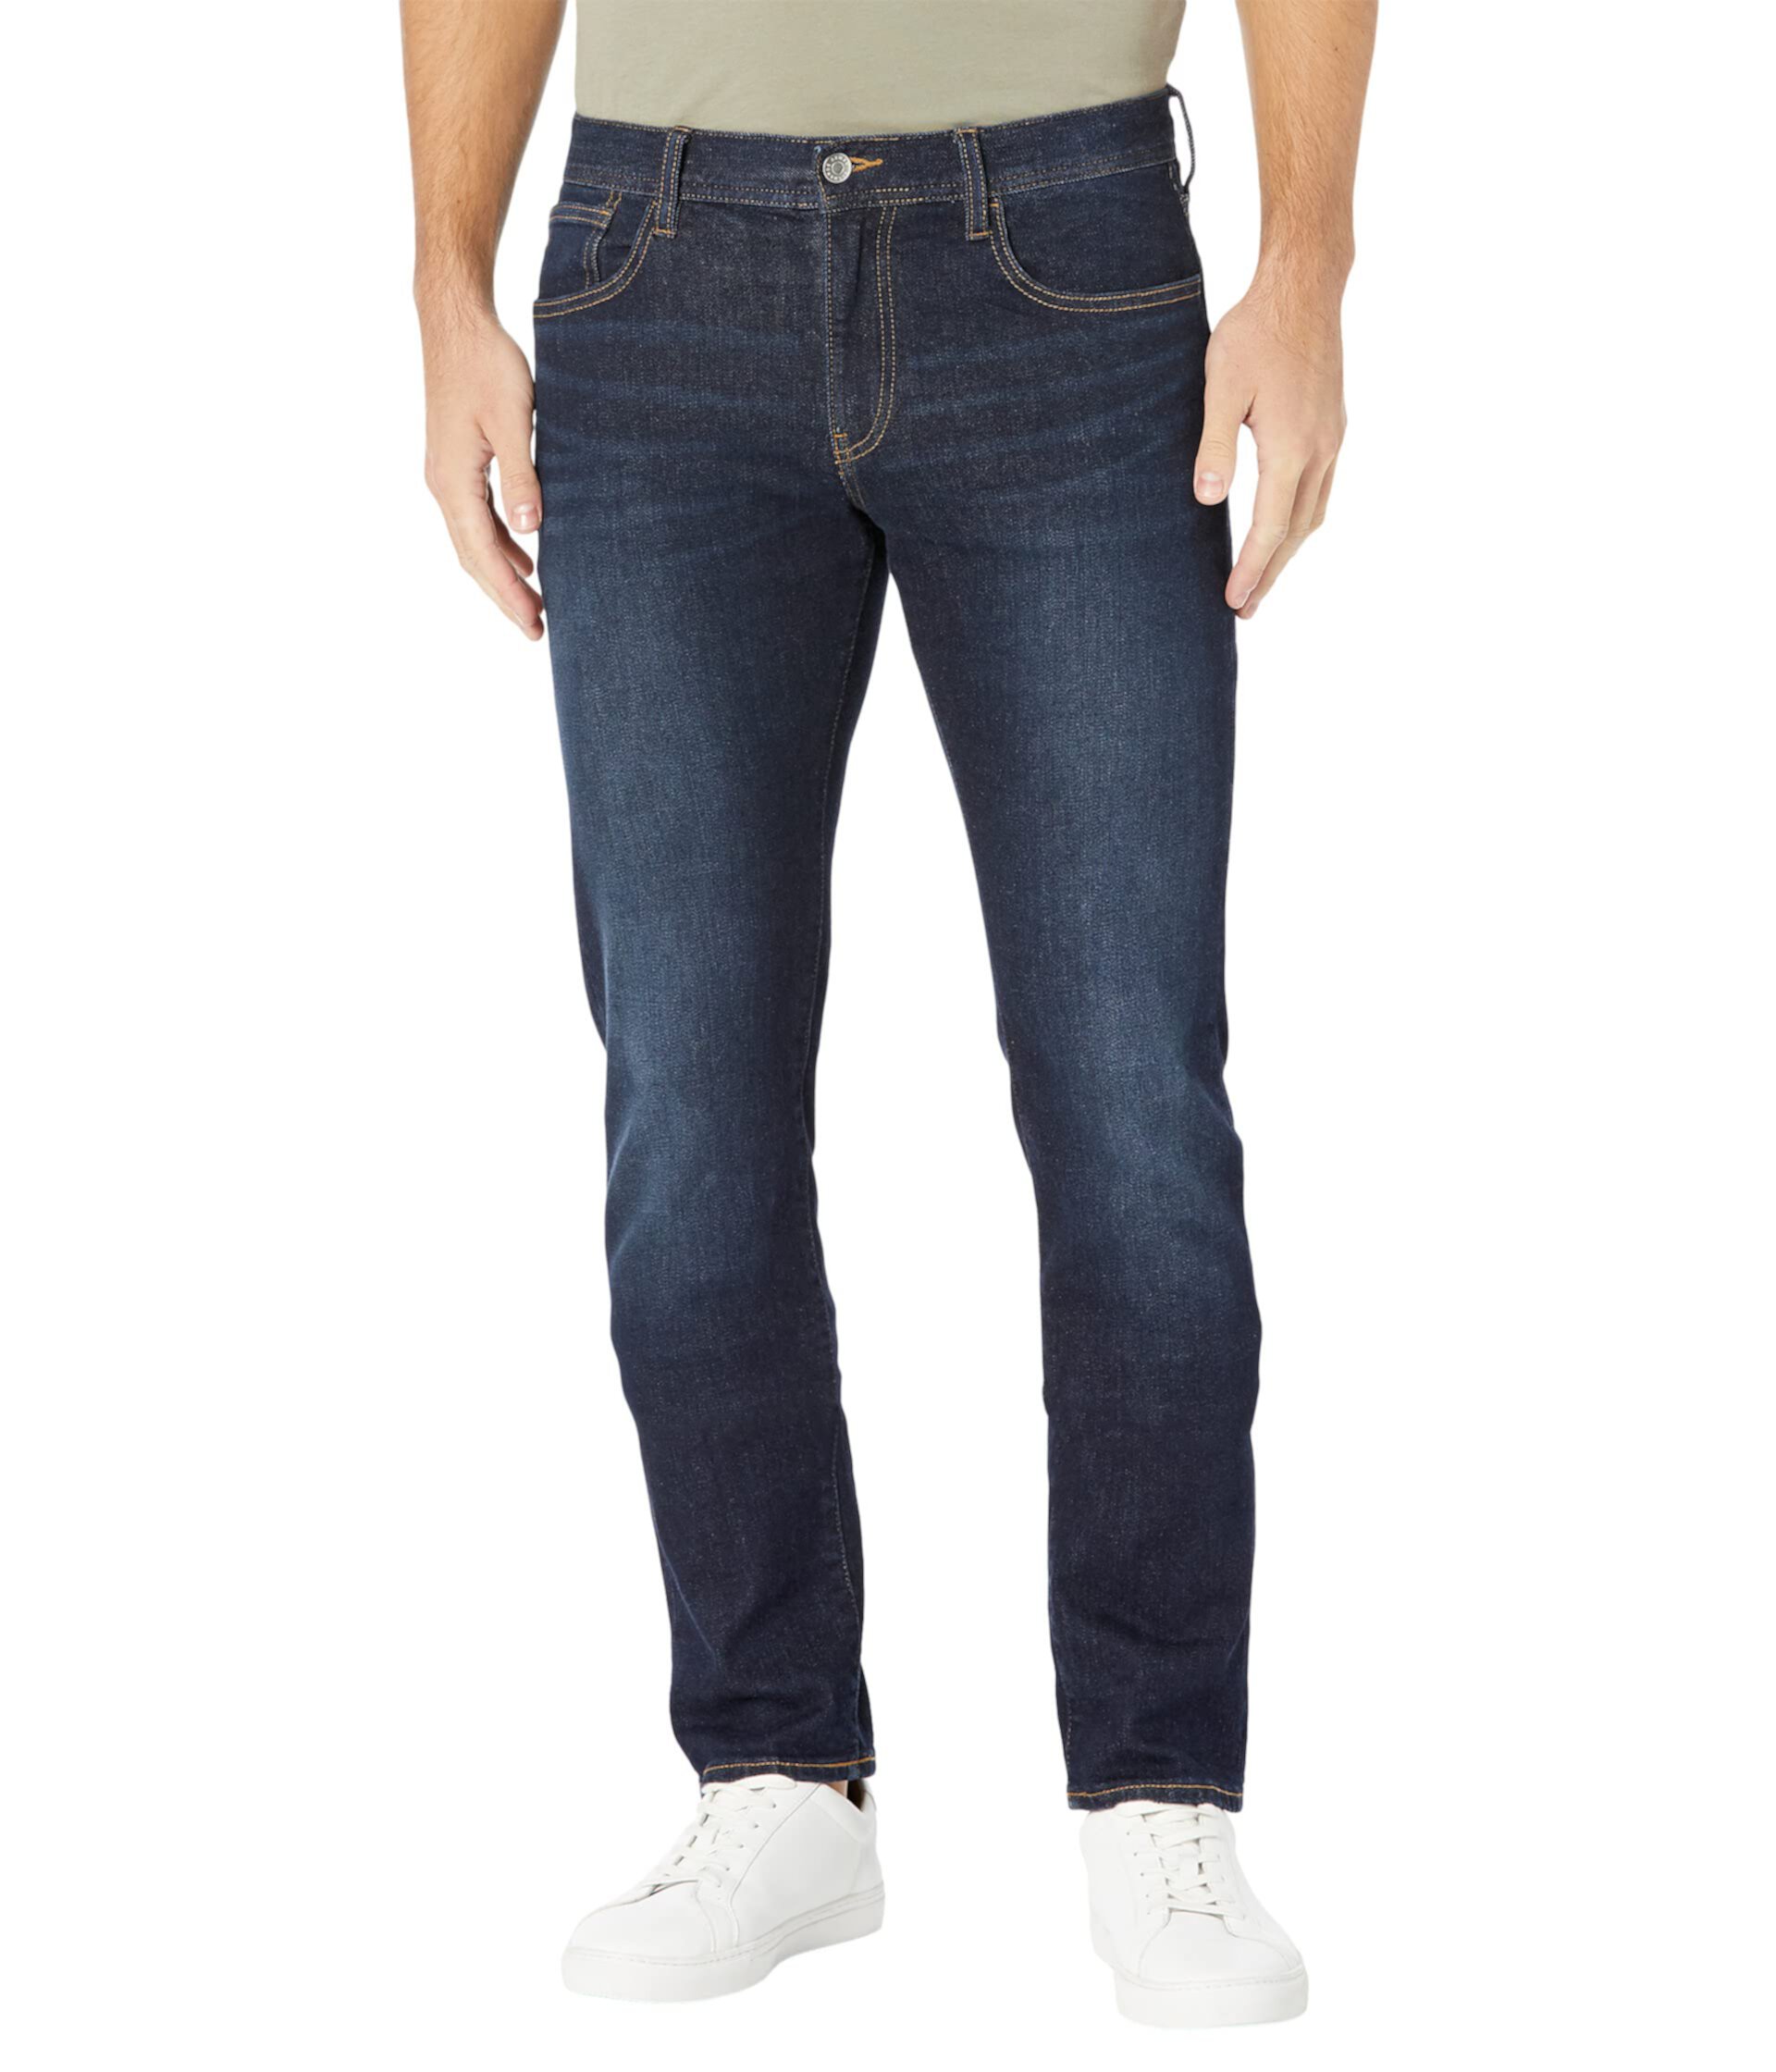 Узкие джинсы с пятью карманами AX Armani Exchange для мужчин AX ARMANI EXCHANGE